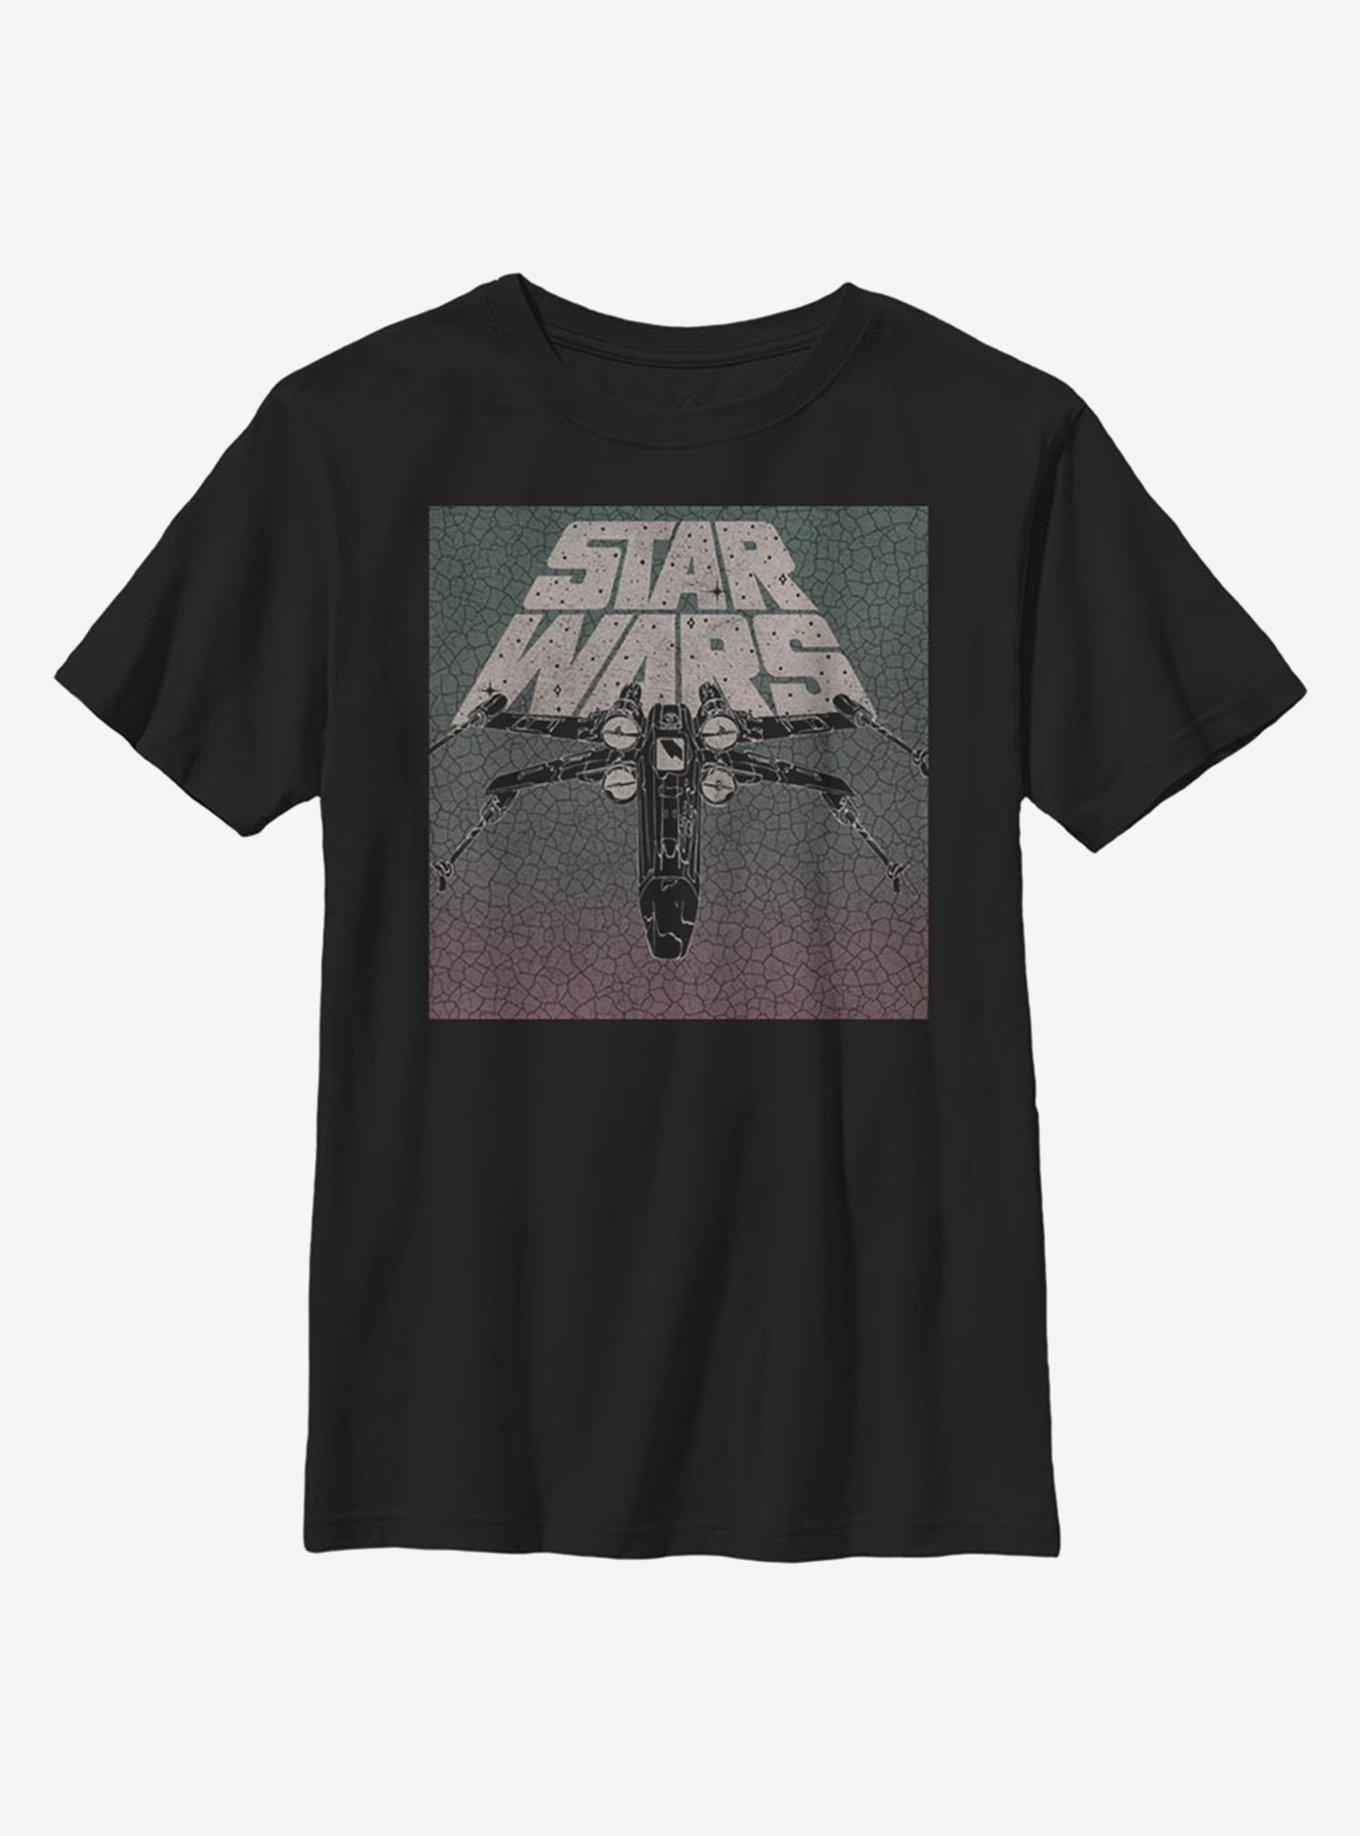 Star Wars Grunge Youth T-Shirt, BLACK, hi-res